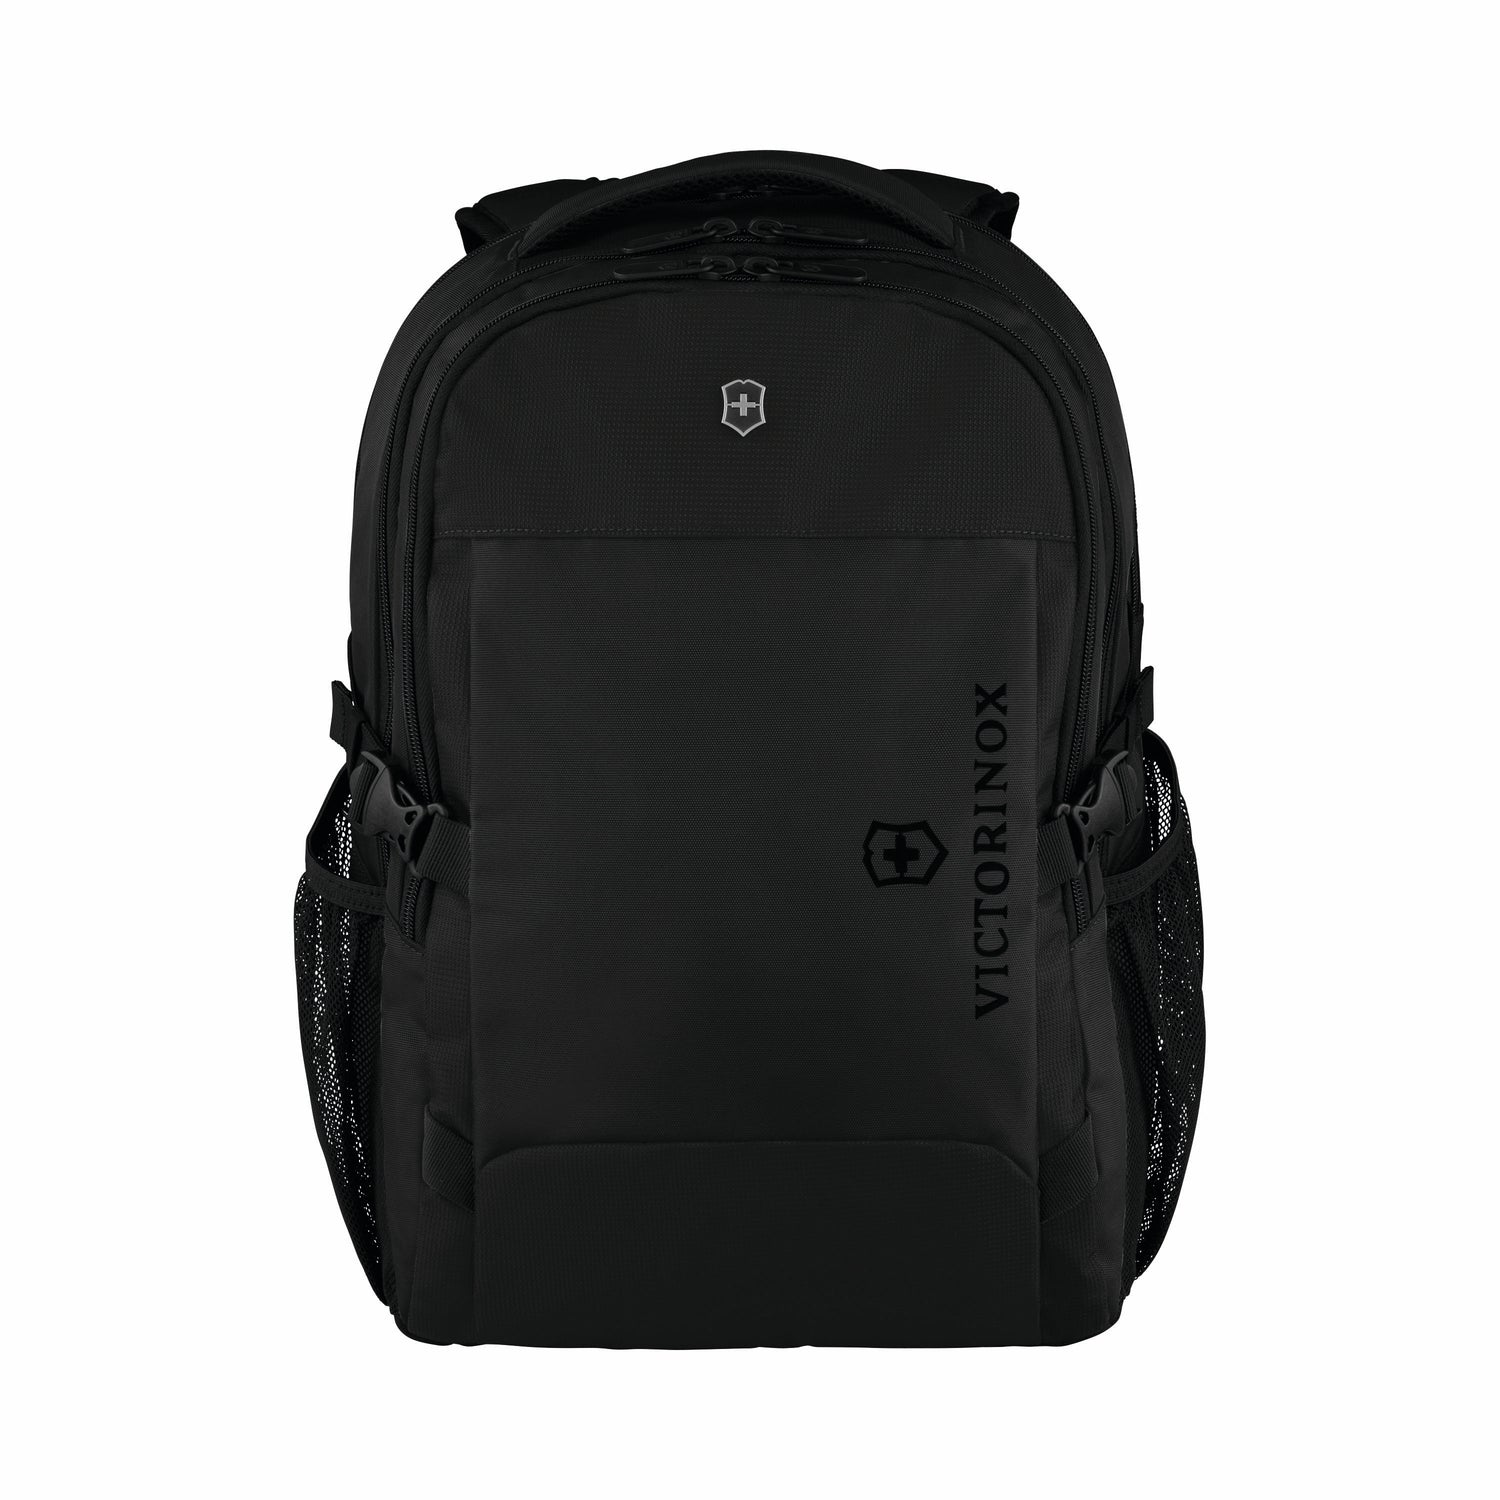 Sport EVO, Daypack, Black victorinox travel gear VTG 611413 Kunzi Shop 1